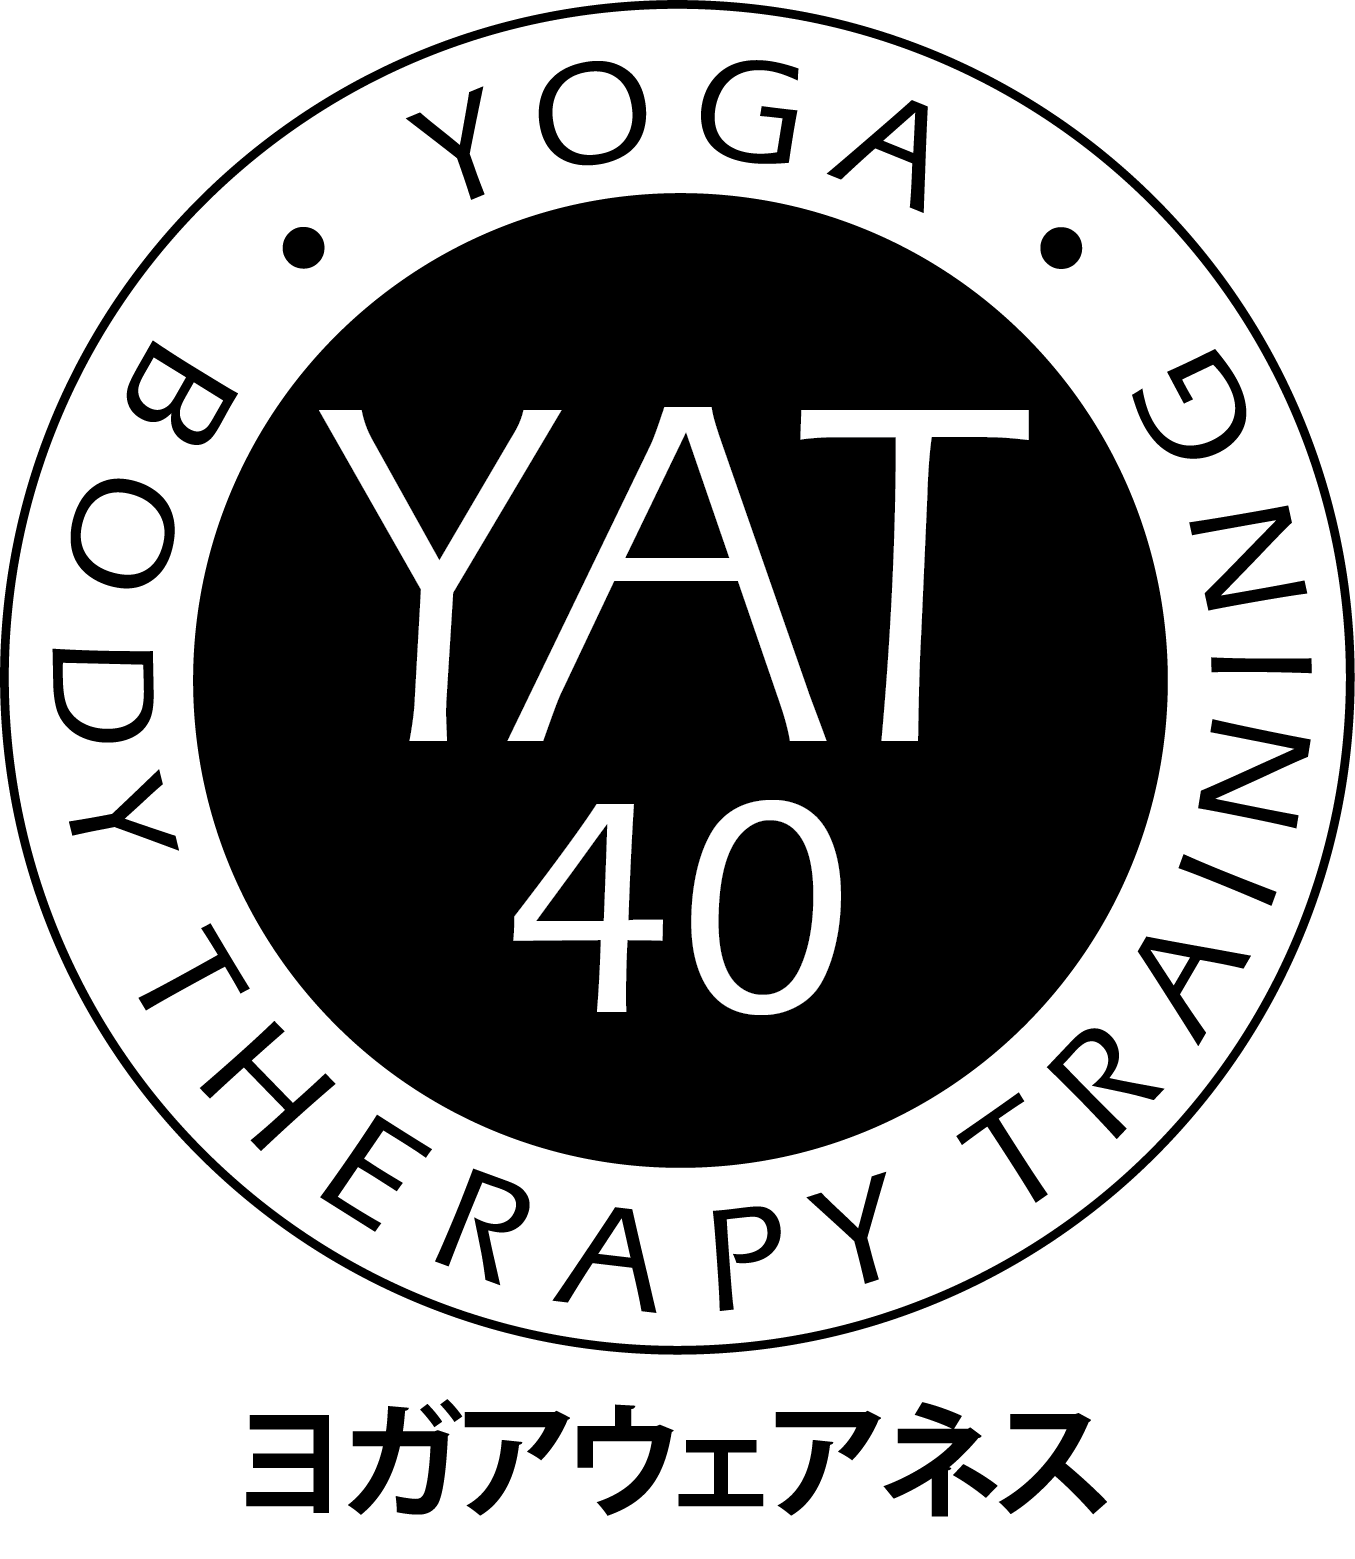 BODY YAT-40-ja